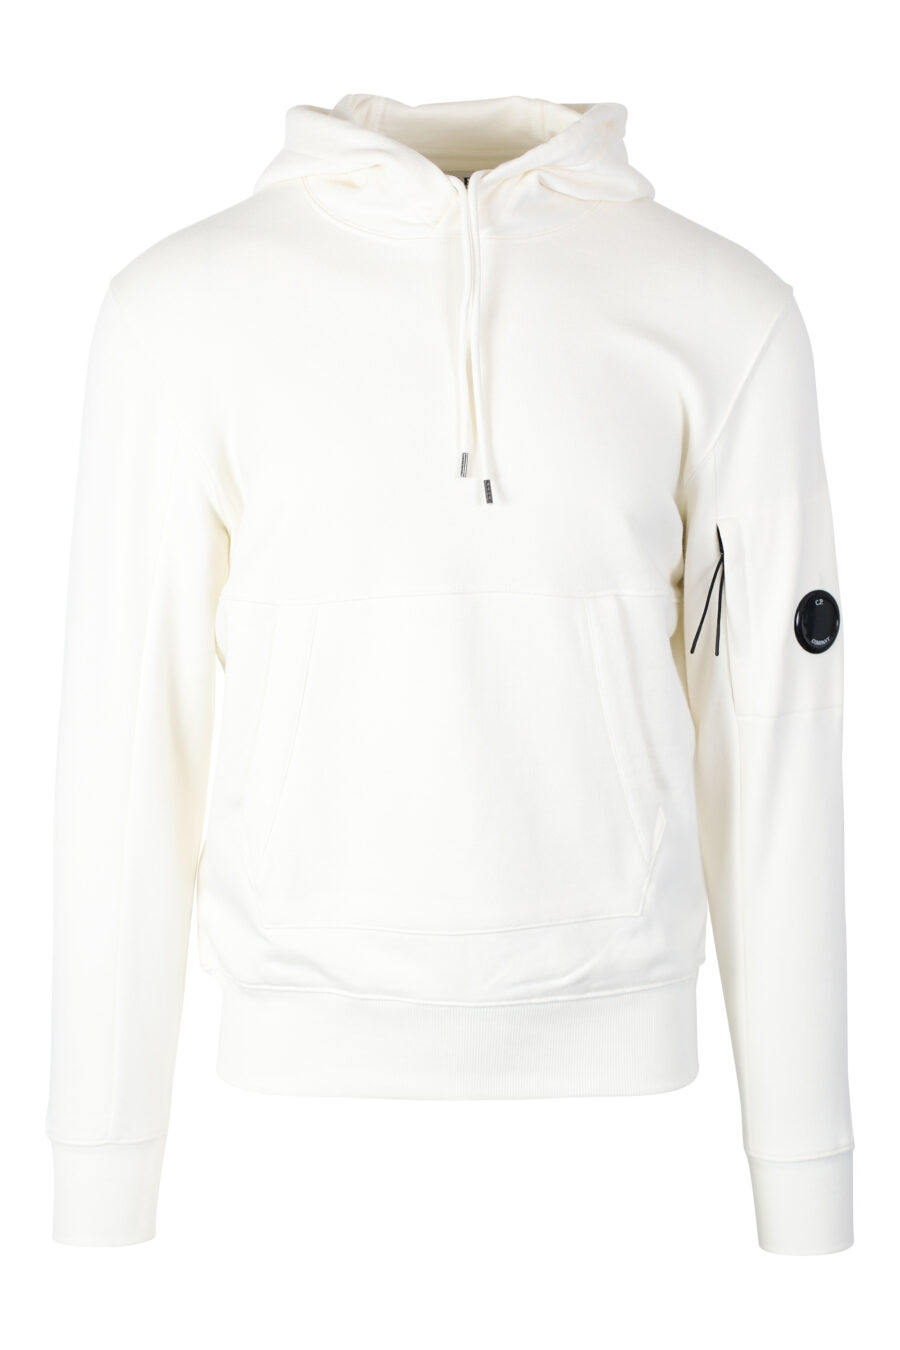 White sweatshirt with hood and circular mini-logo on the side - IMG 2387